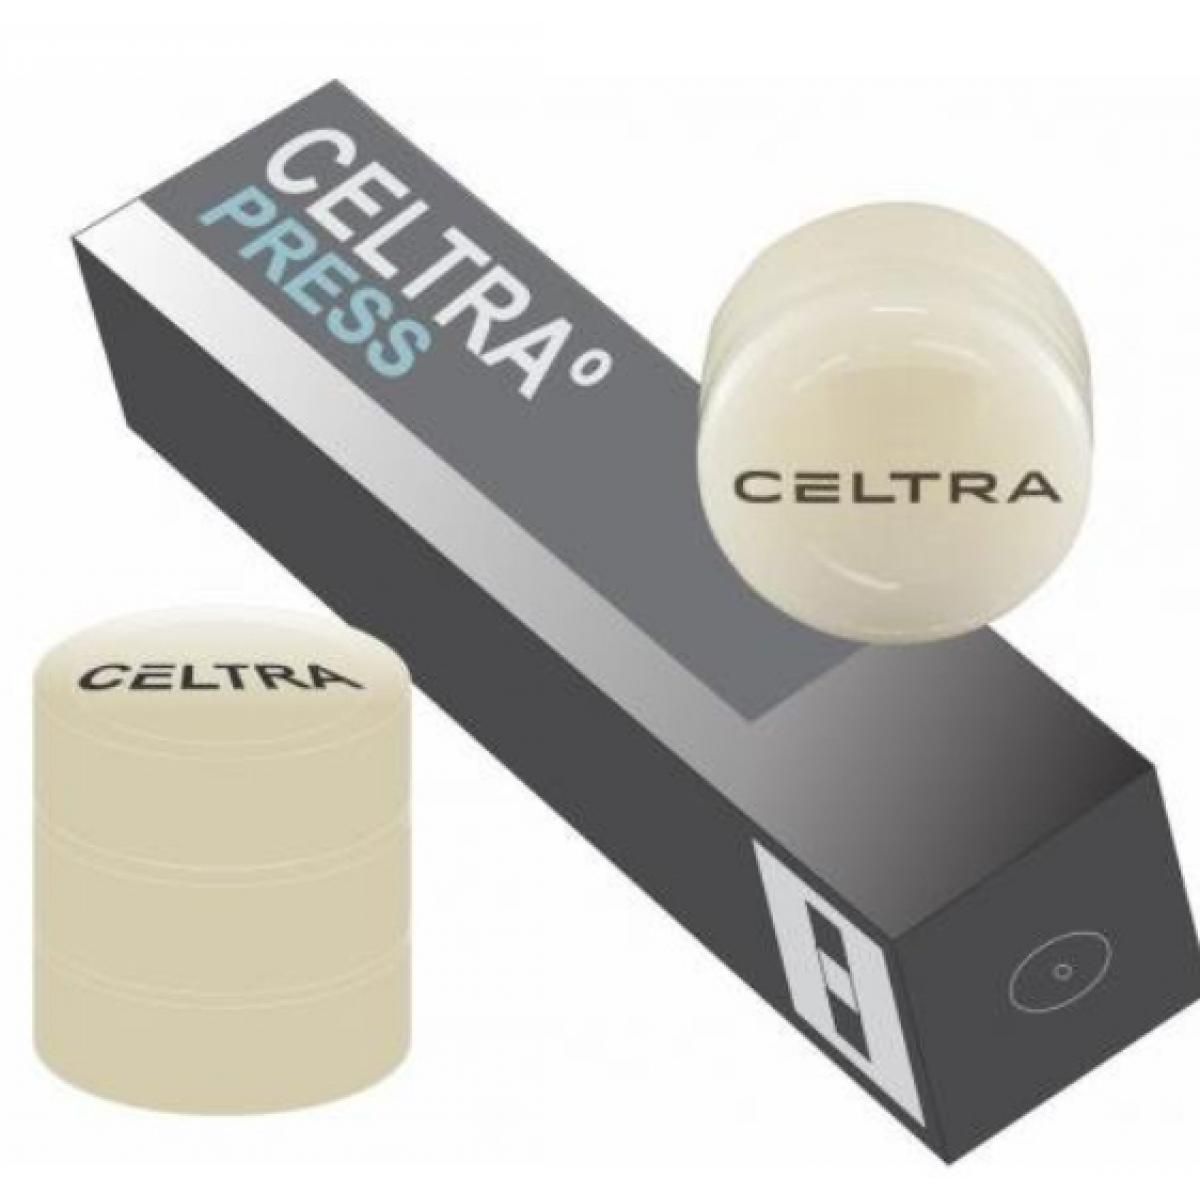 CELTRA PRESS HT I2 5 X 3 GR DENTSPLY -